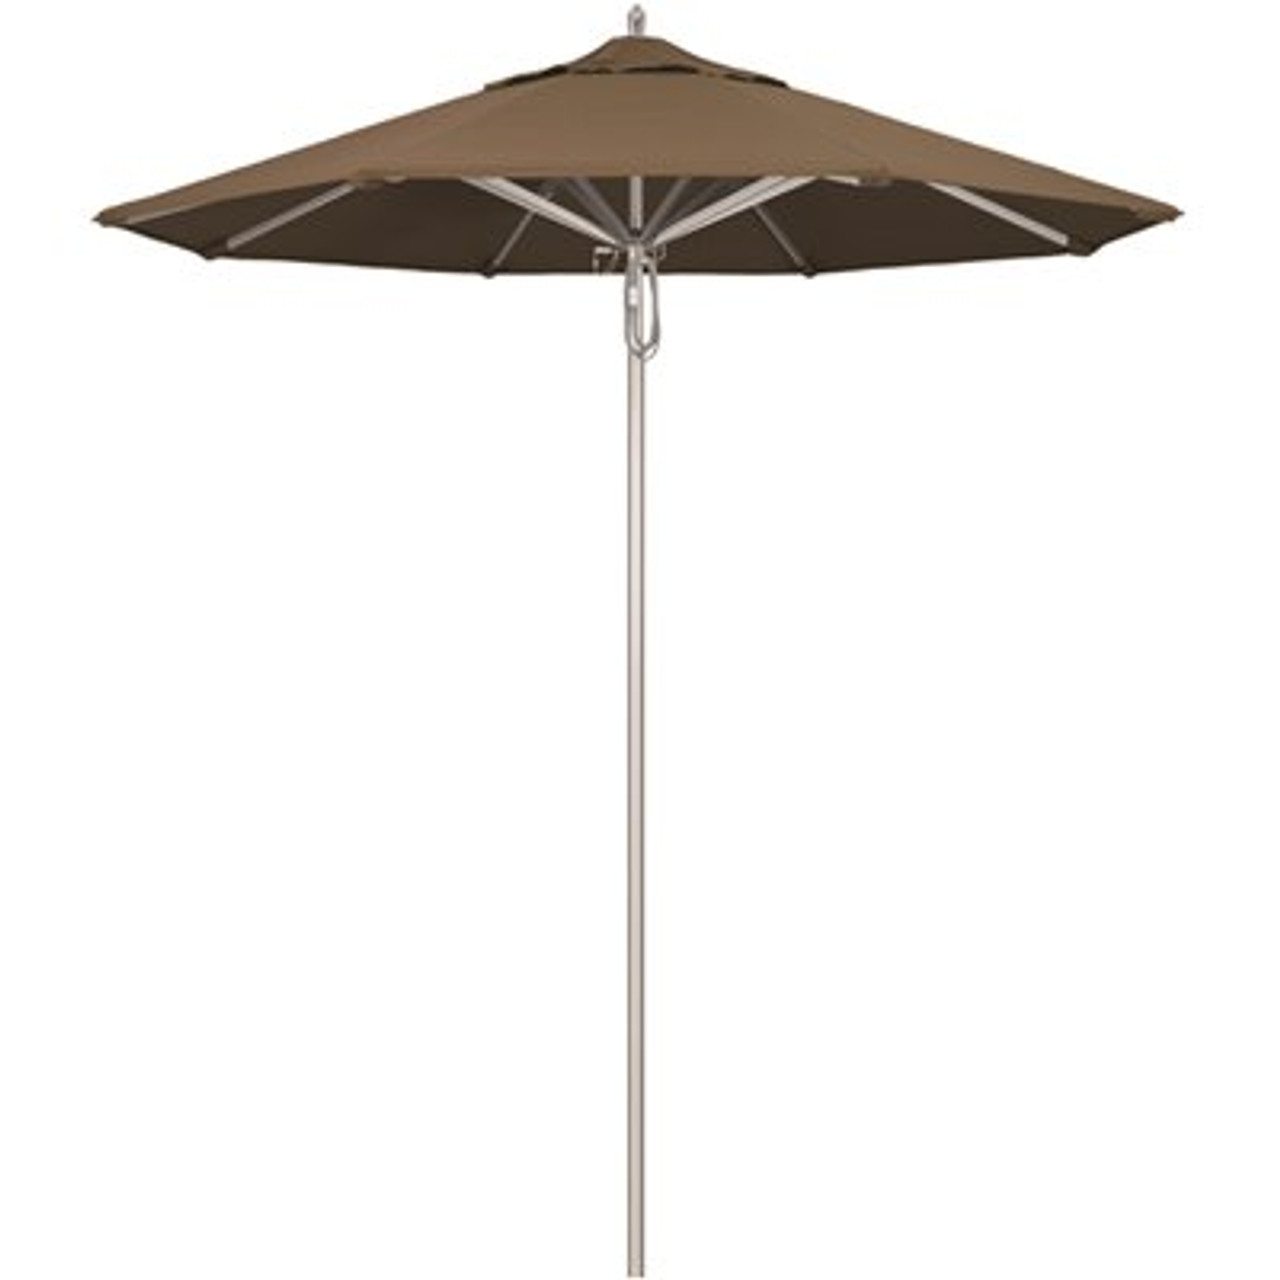 California Umbrella 7.5 ft. Silver Aluminum Commercial Market Patio Umbrella with Pulley Lift in Cocoa Sunbrella